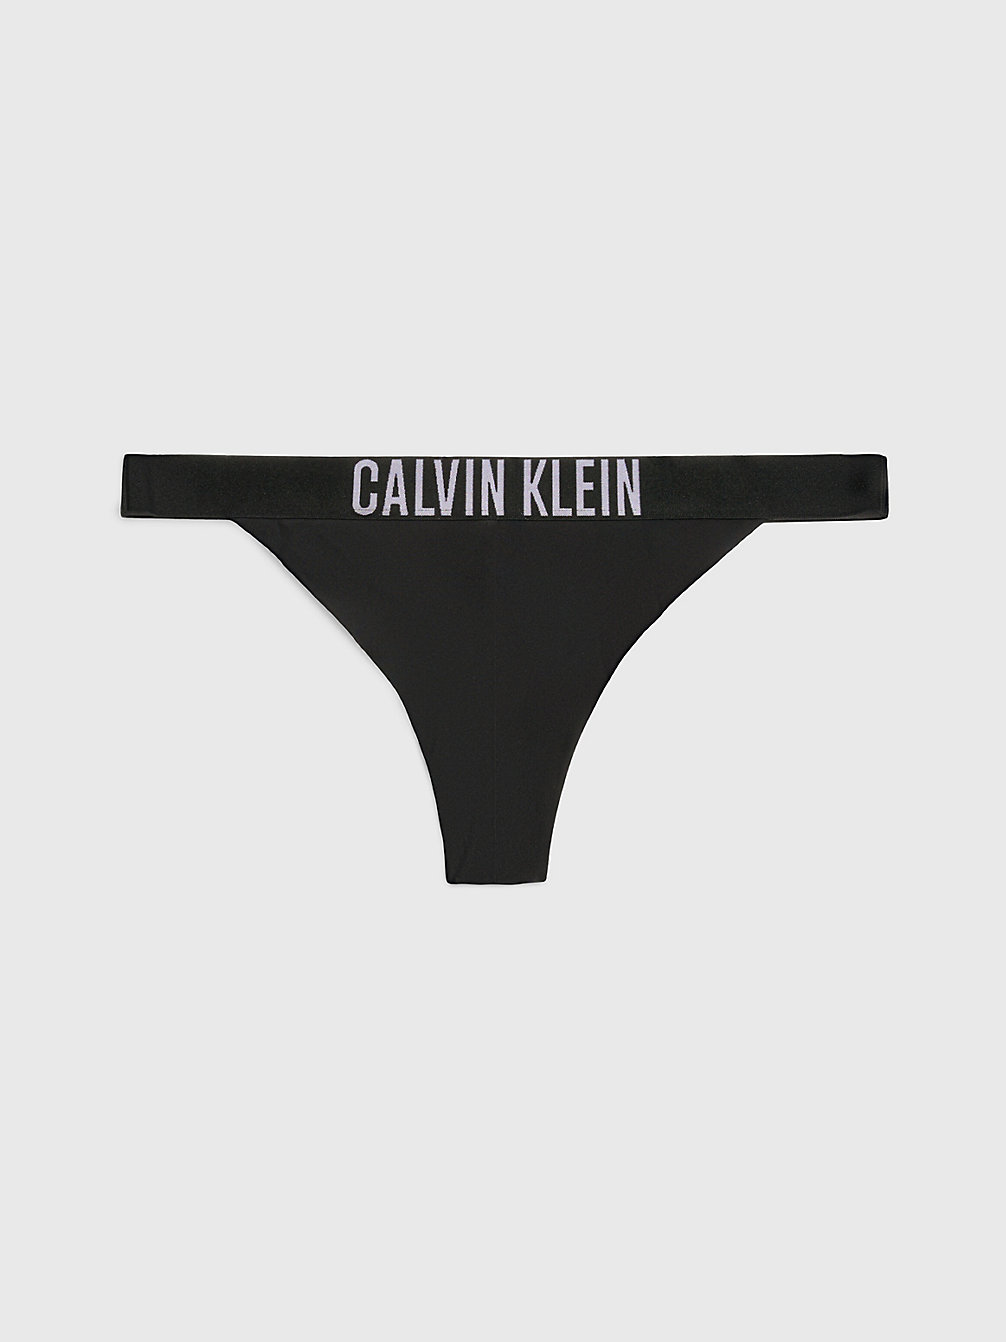 PVH BLACK > Brazilian Bikinihosen – Intense Power > undefined Damen - Calvin Klein